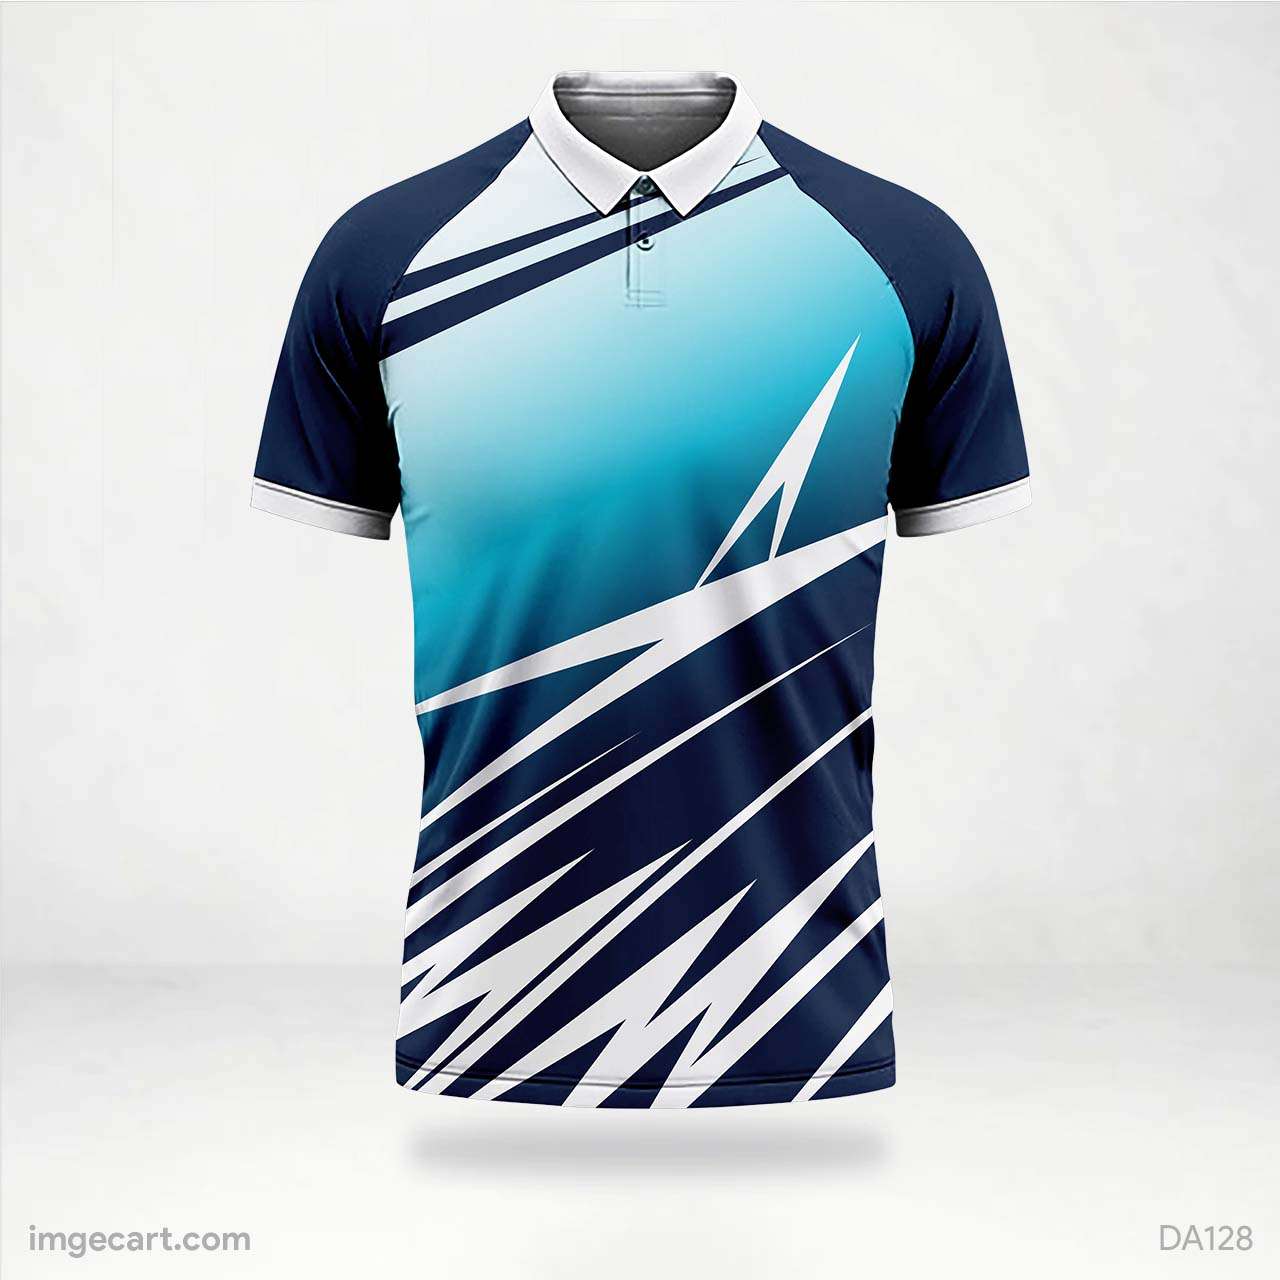 Cricket Jersey design Blue With white Pattern - imgecart